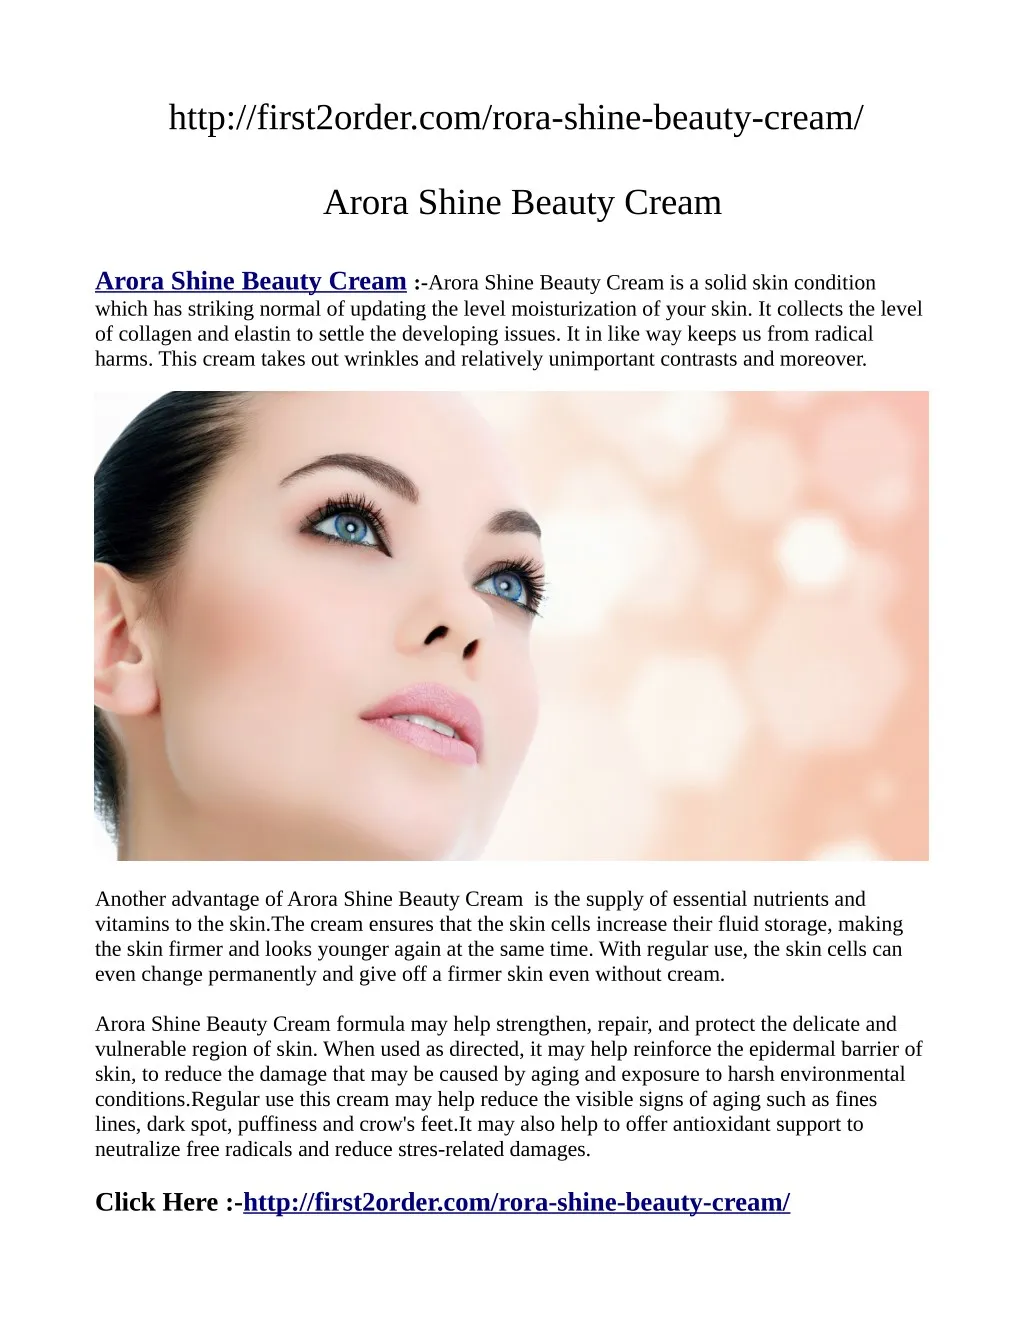 http first2order com rora shine beauty cream